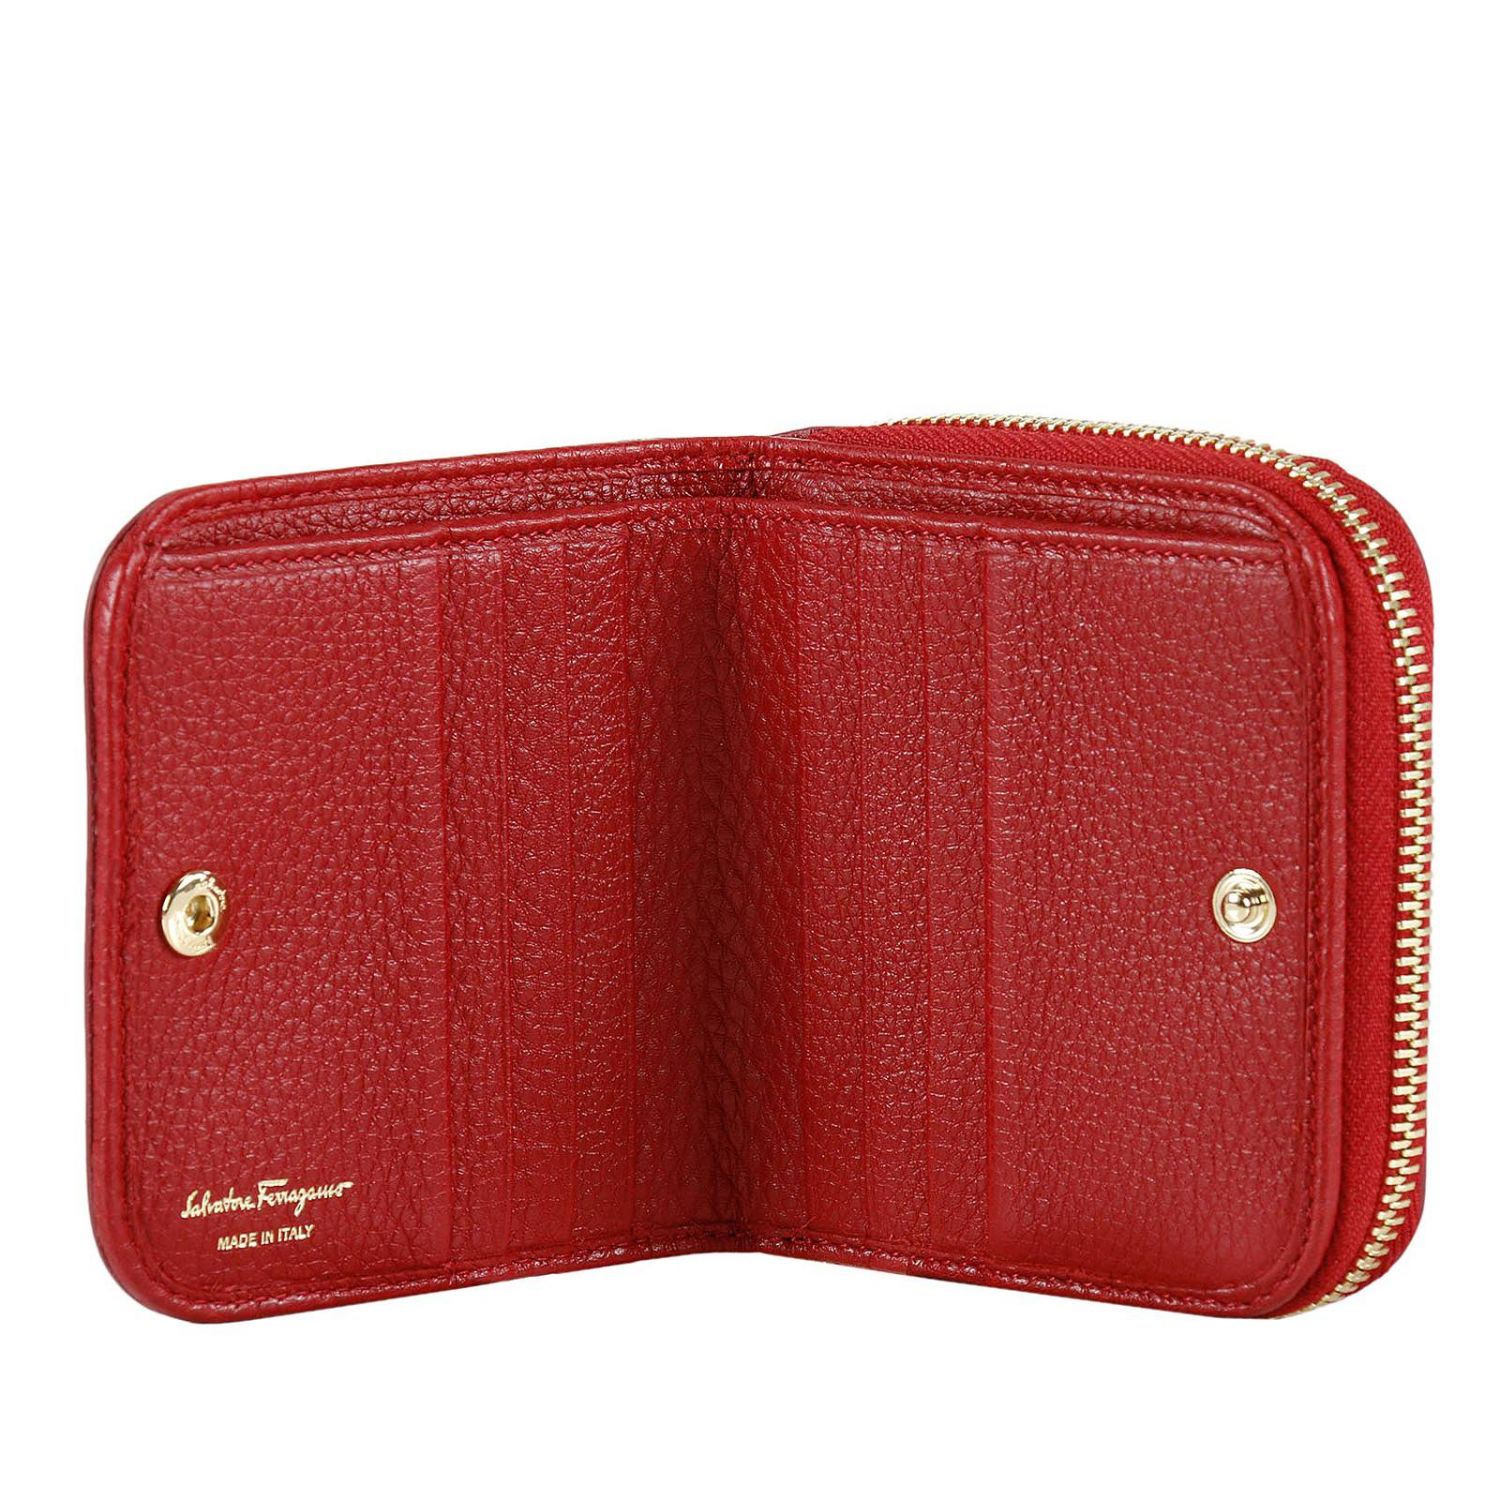 Salvatore Ferragamo Outlet: Wallet women - Red | Wallet Salvatore ...